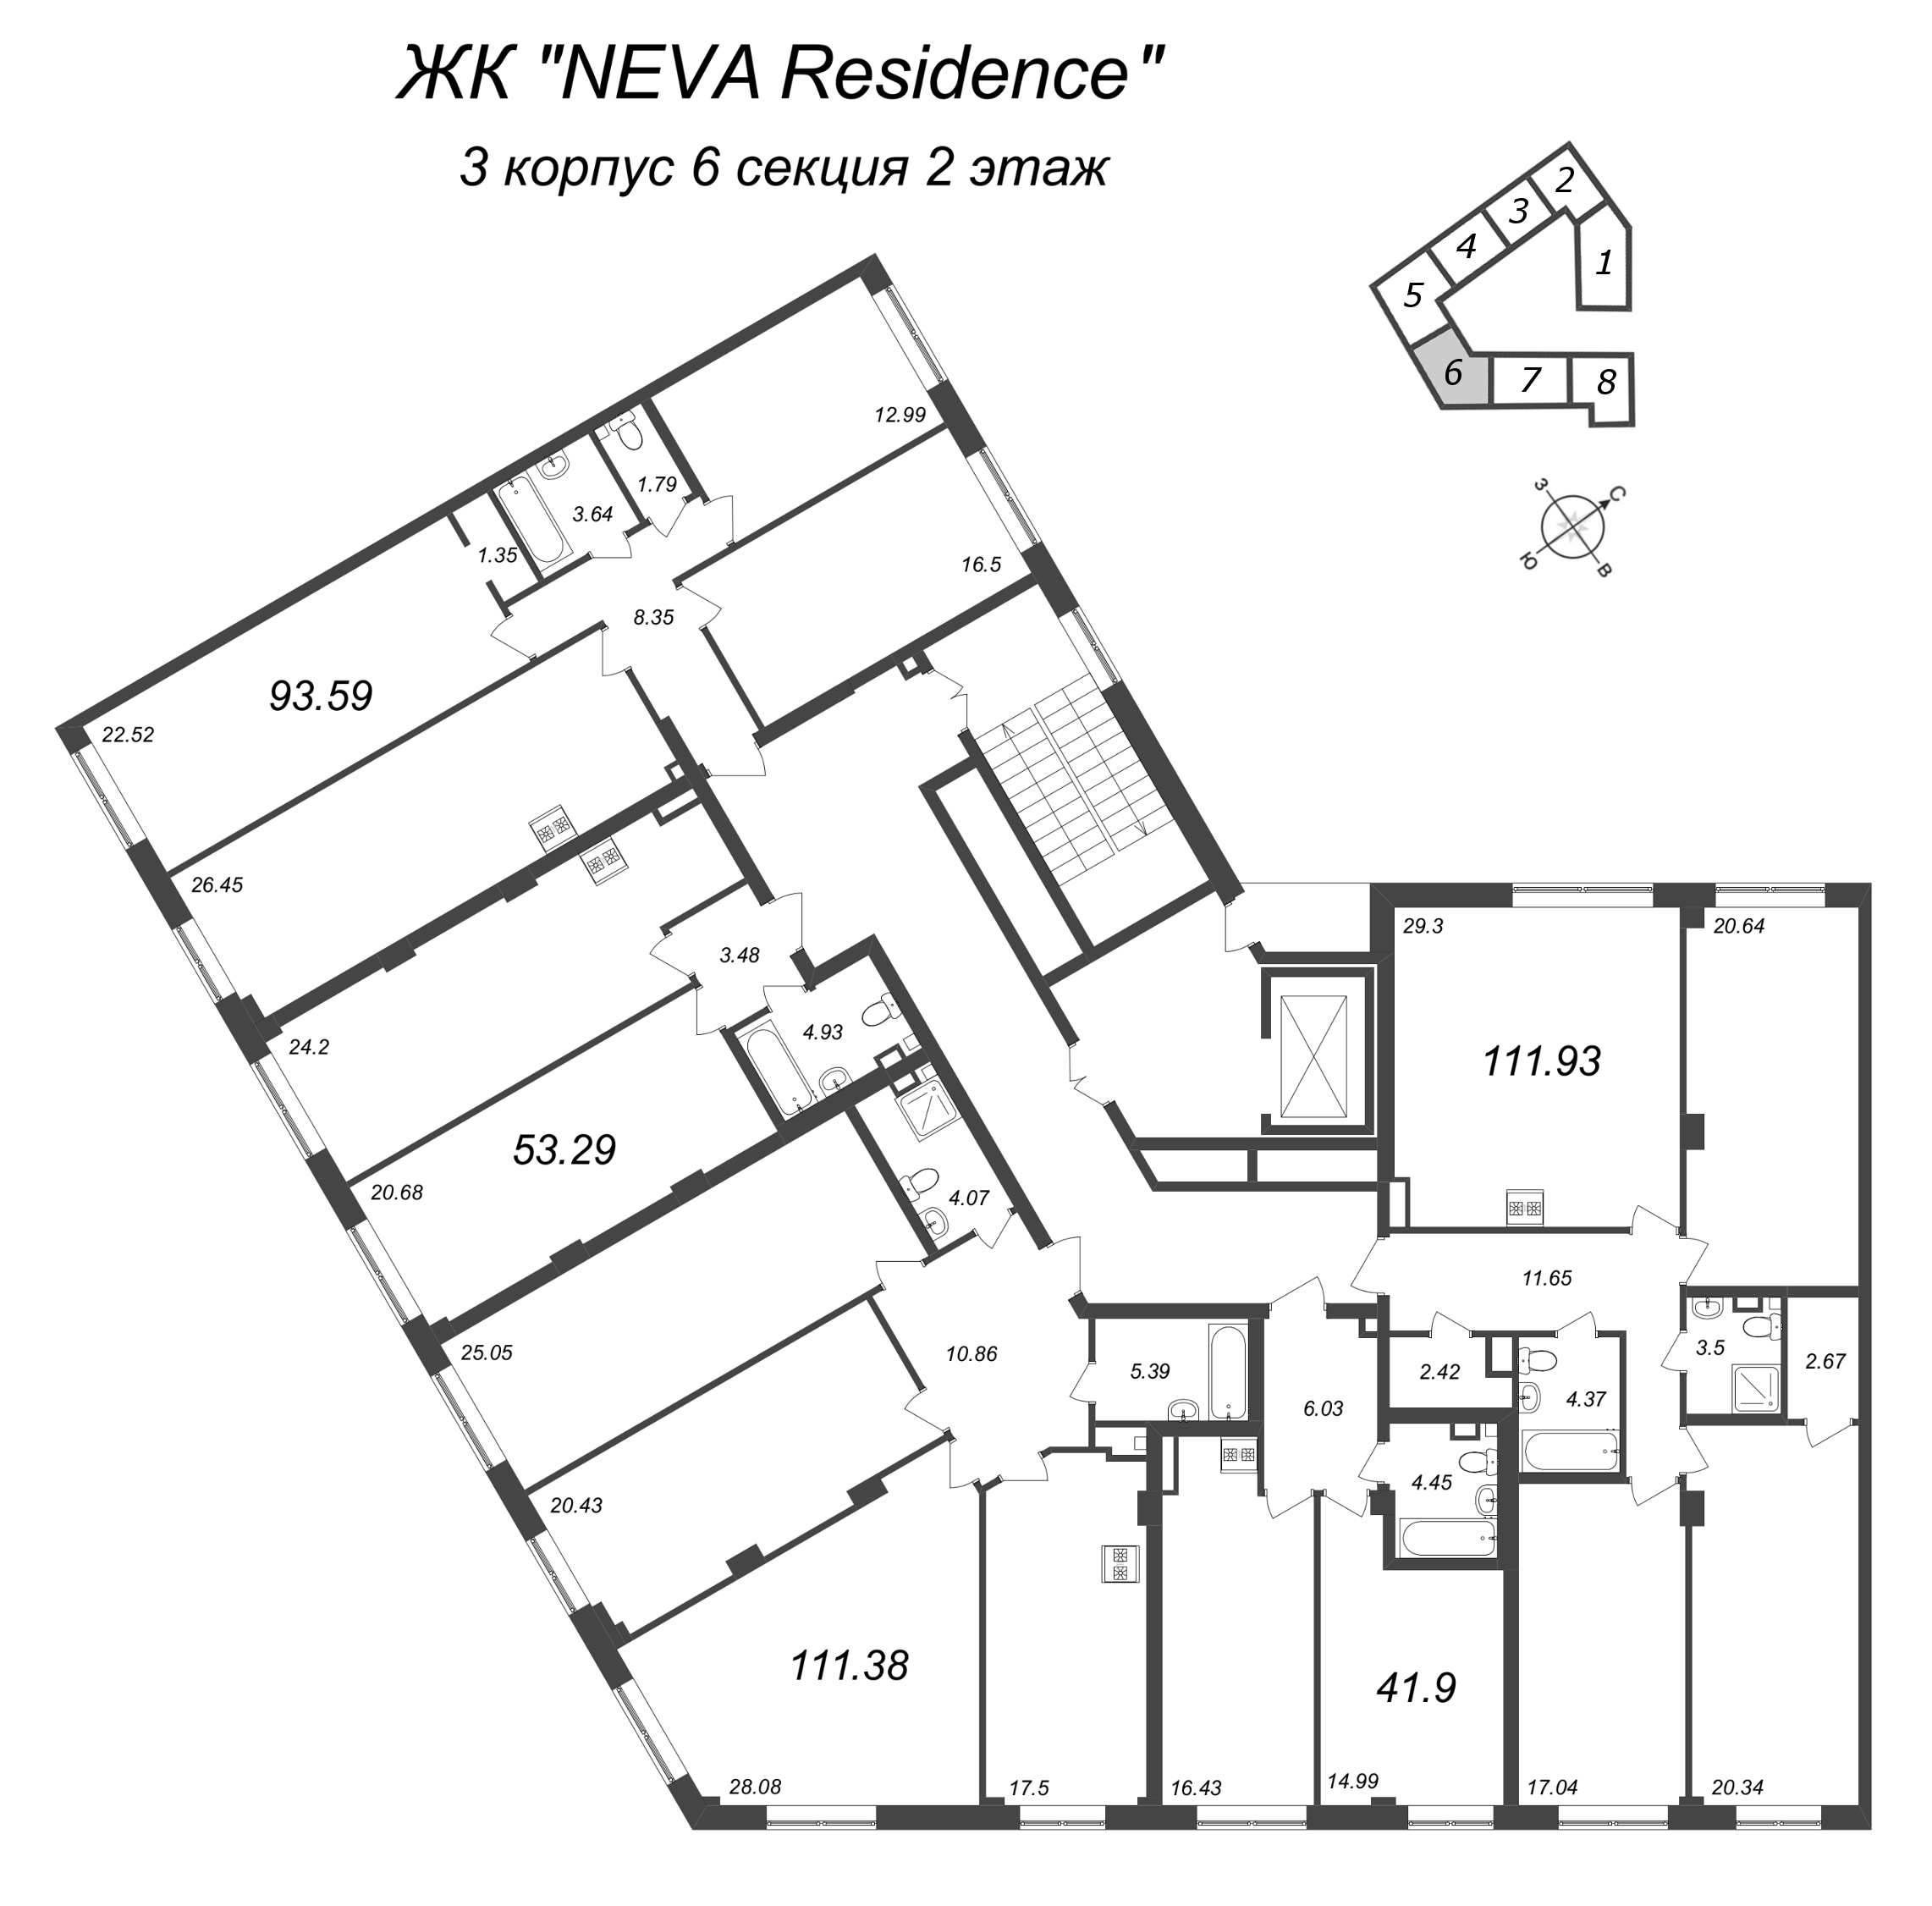 4-комнатная (Евро) квартира, 93.59 м² - планировка этажа